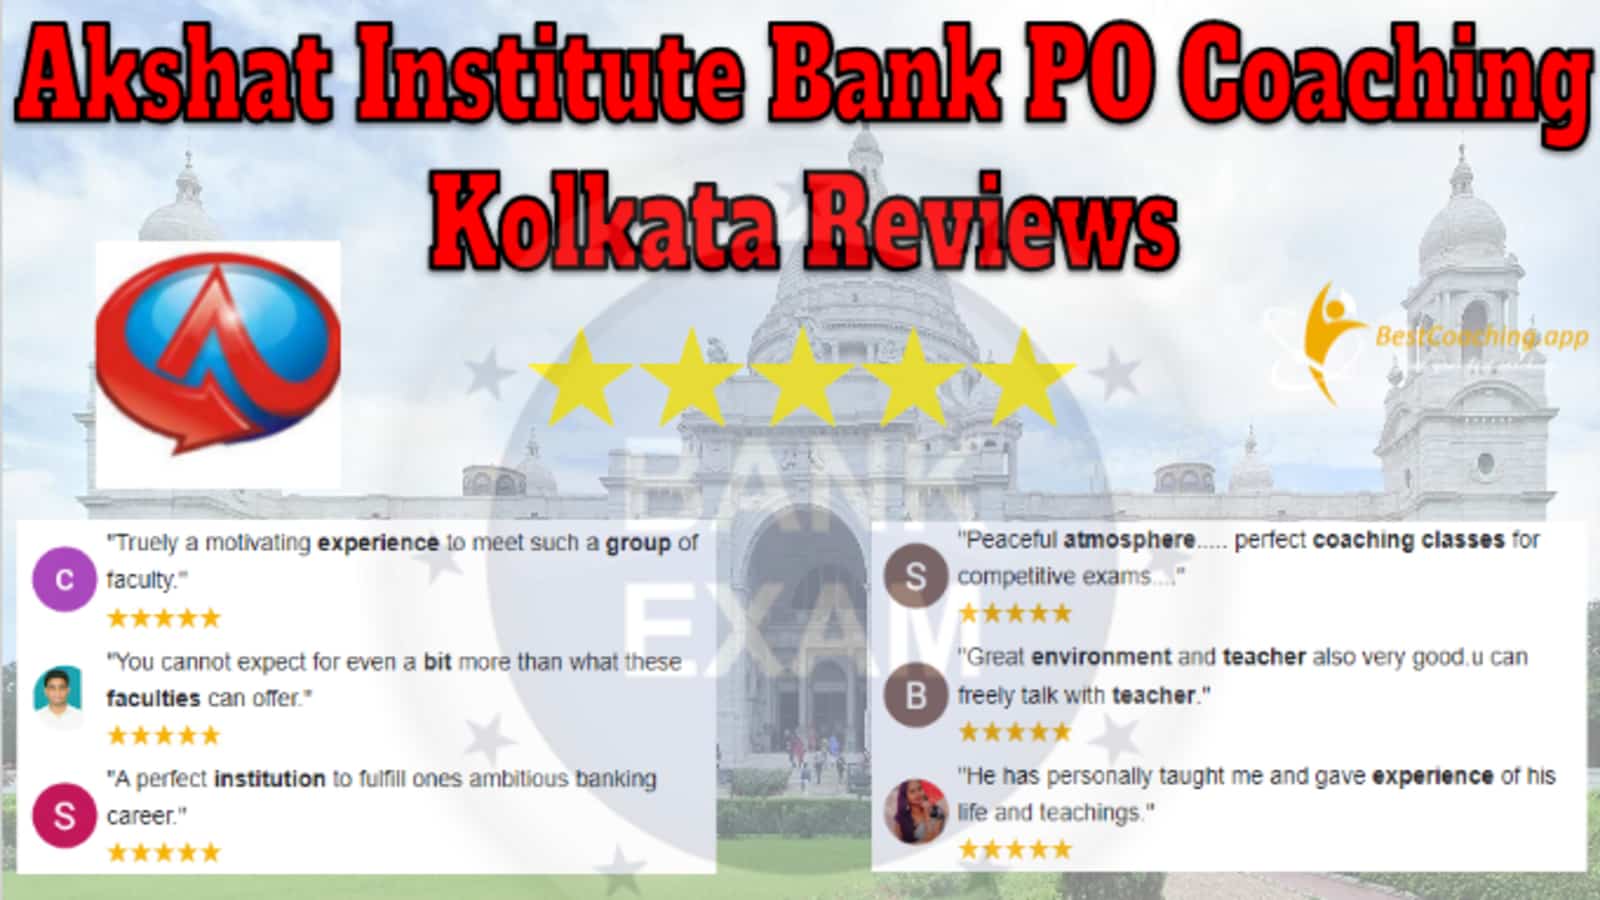 Akshat Institute Bank PO Coaching Kolkata Reviews